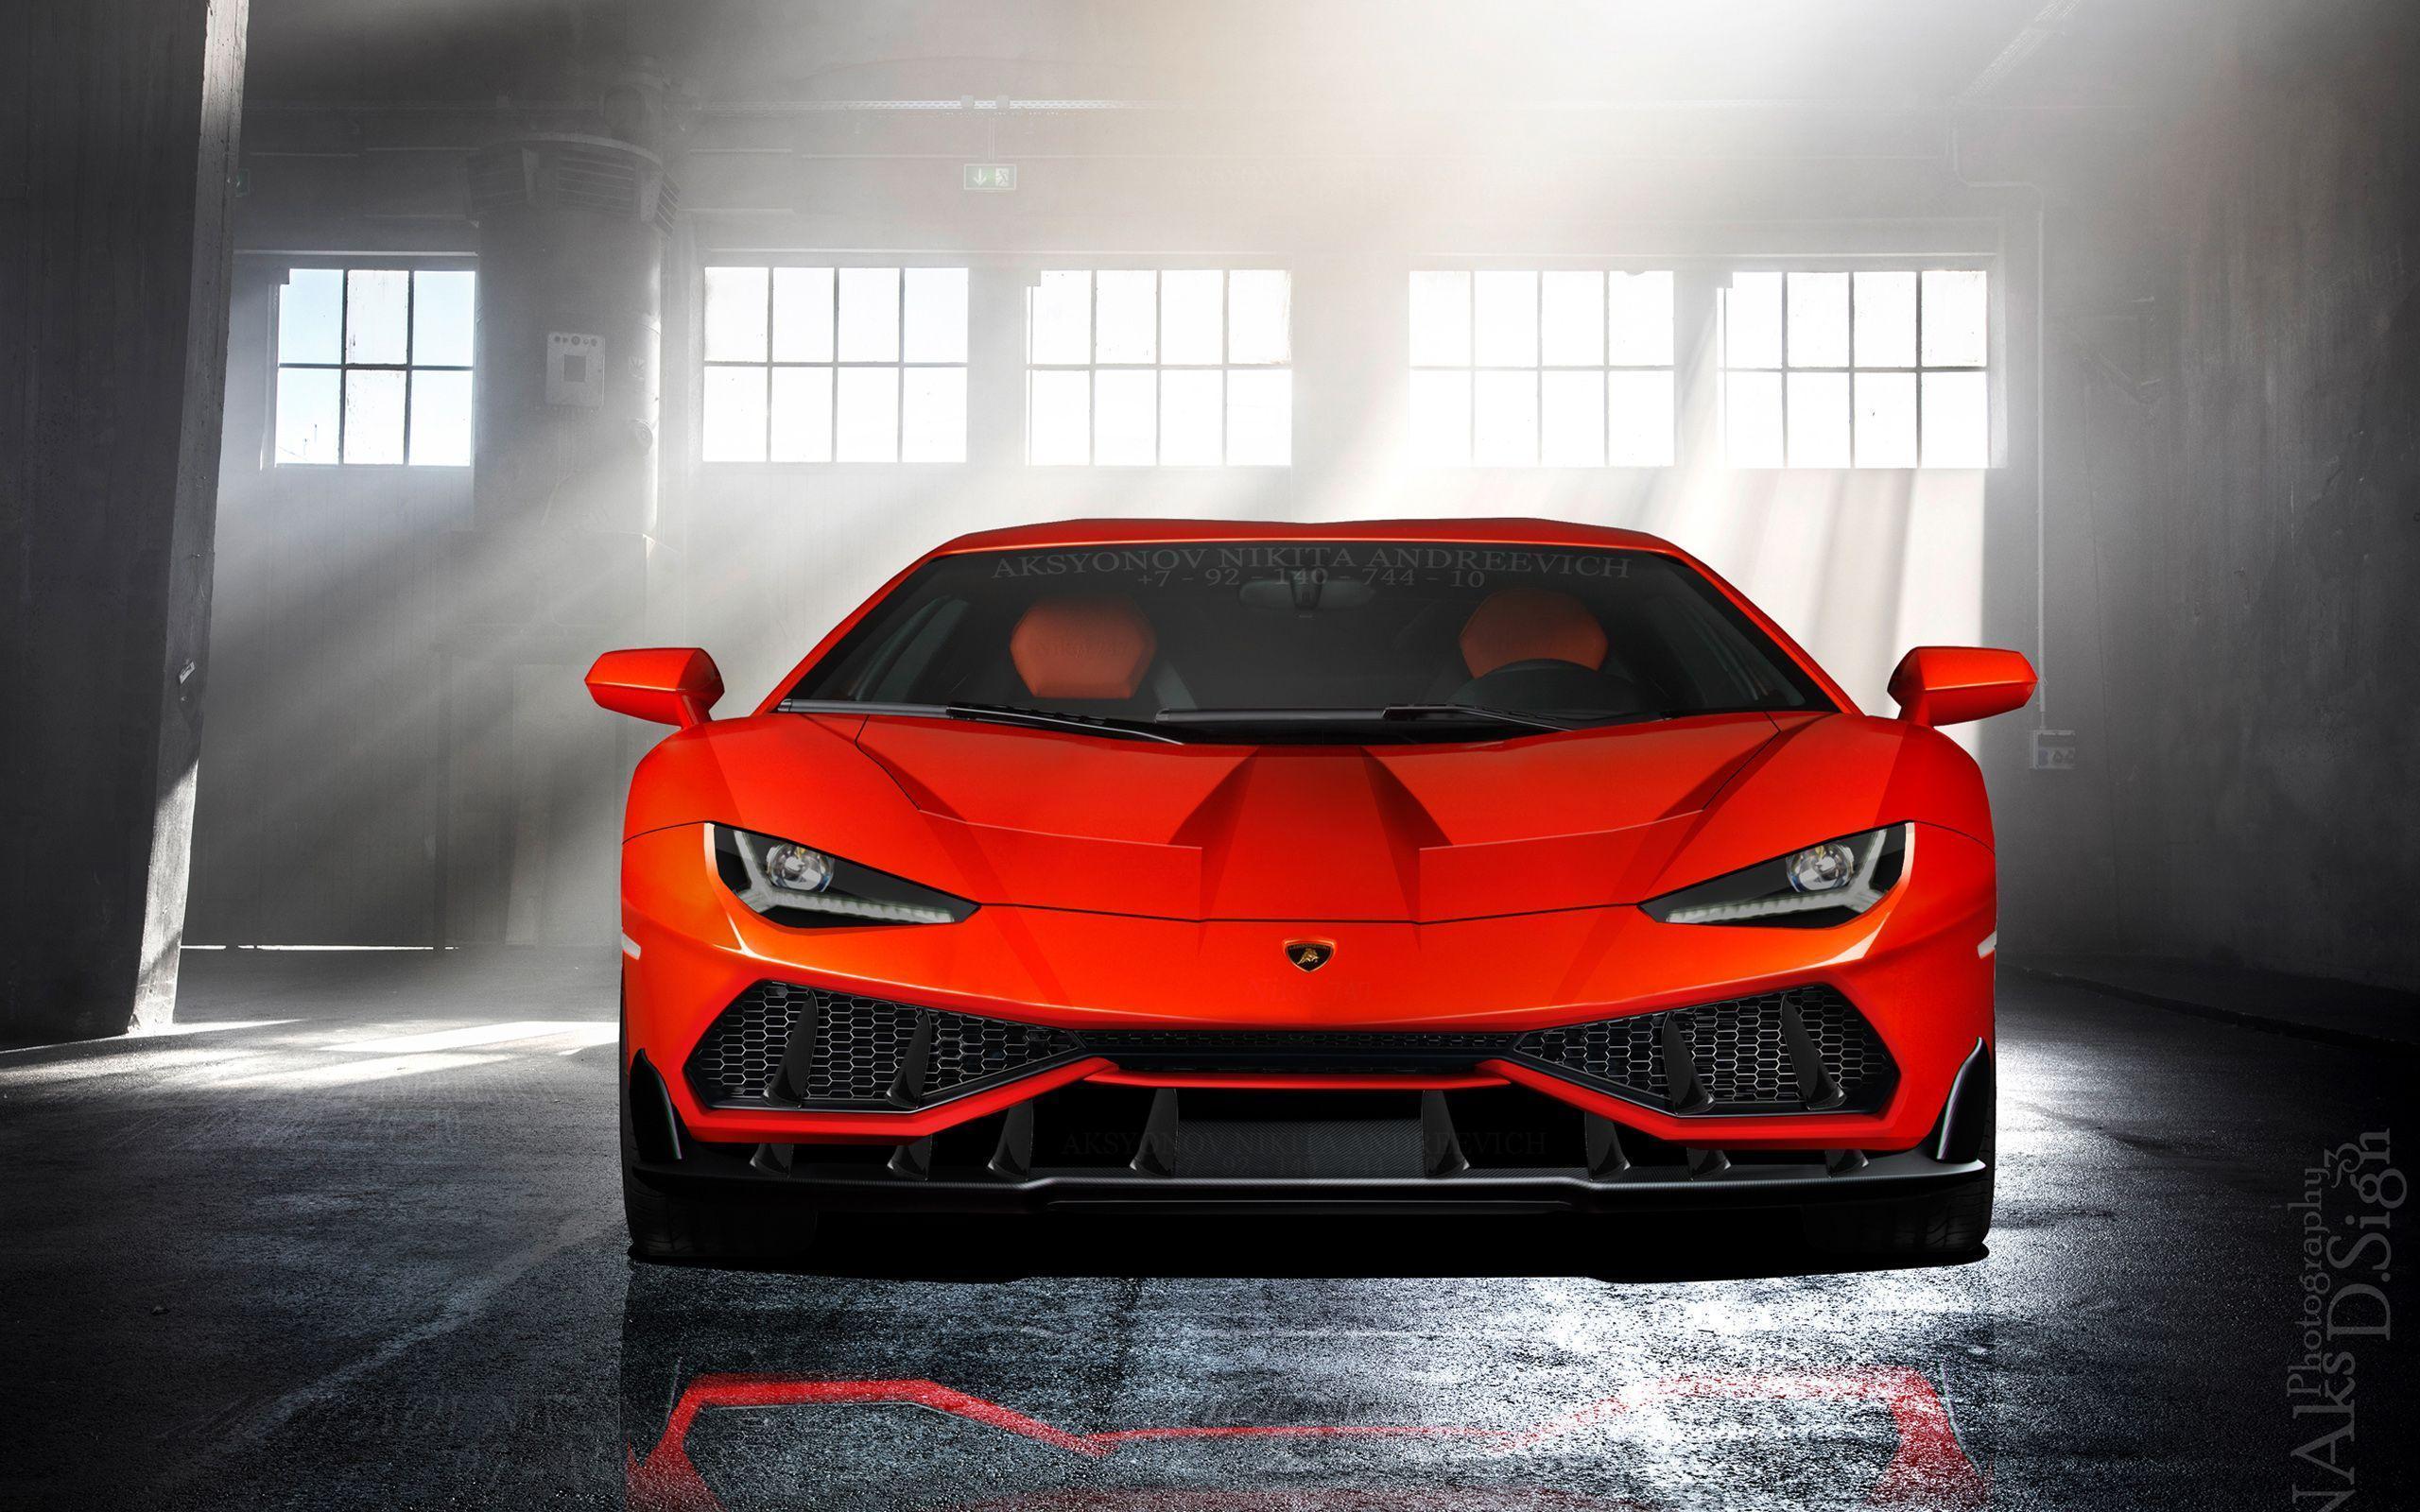 Red Lamborghini Centenario Wallpapers